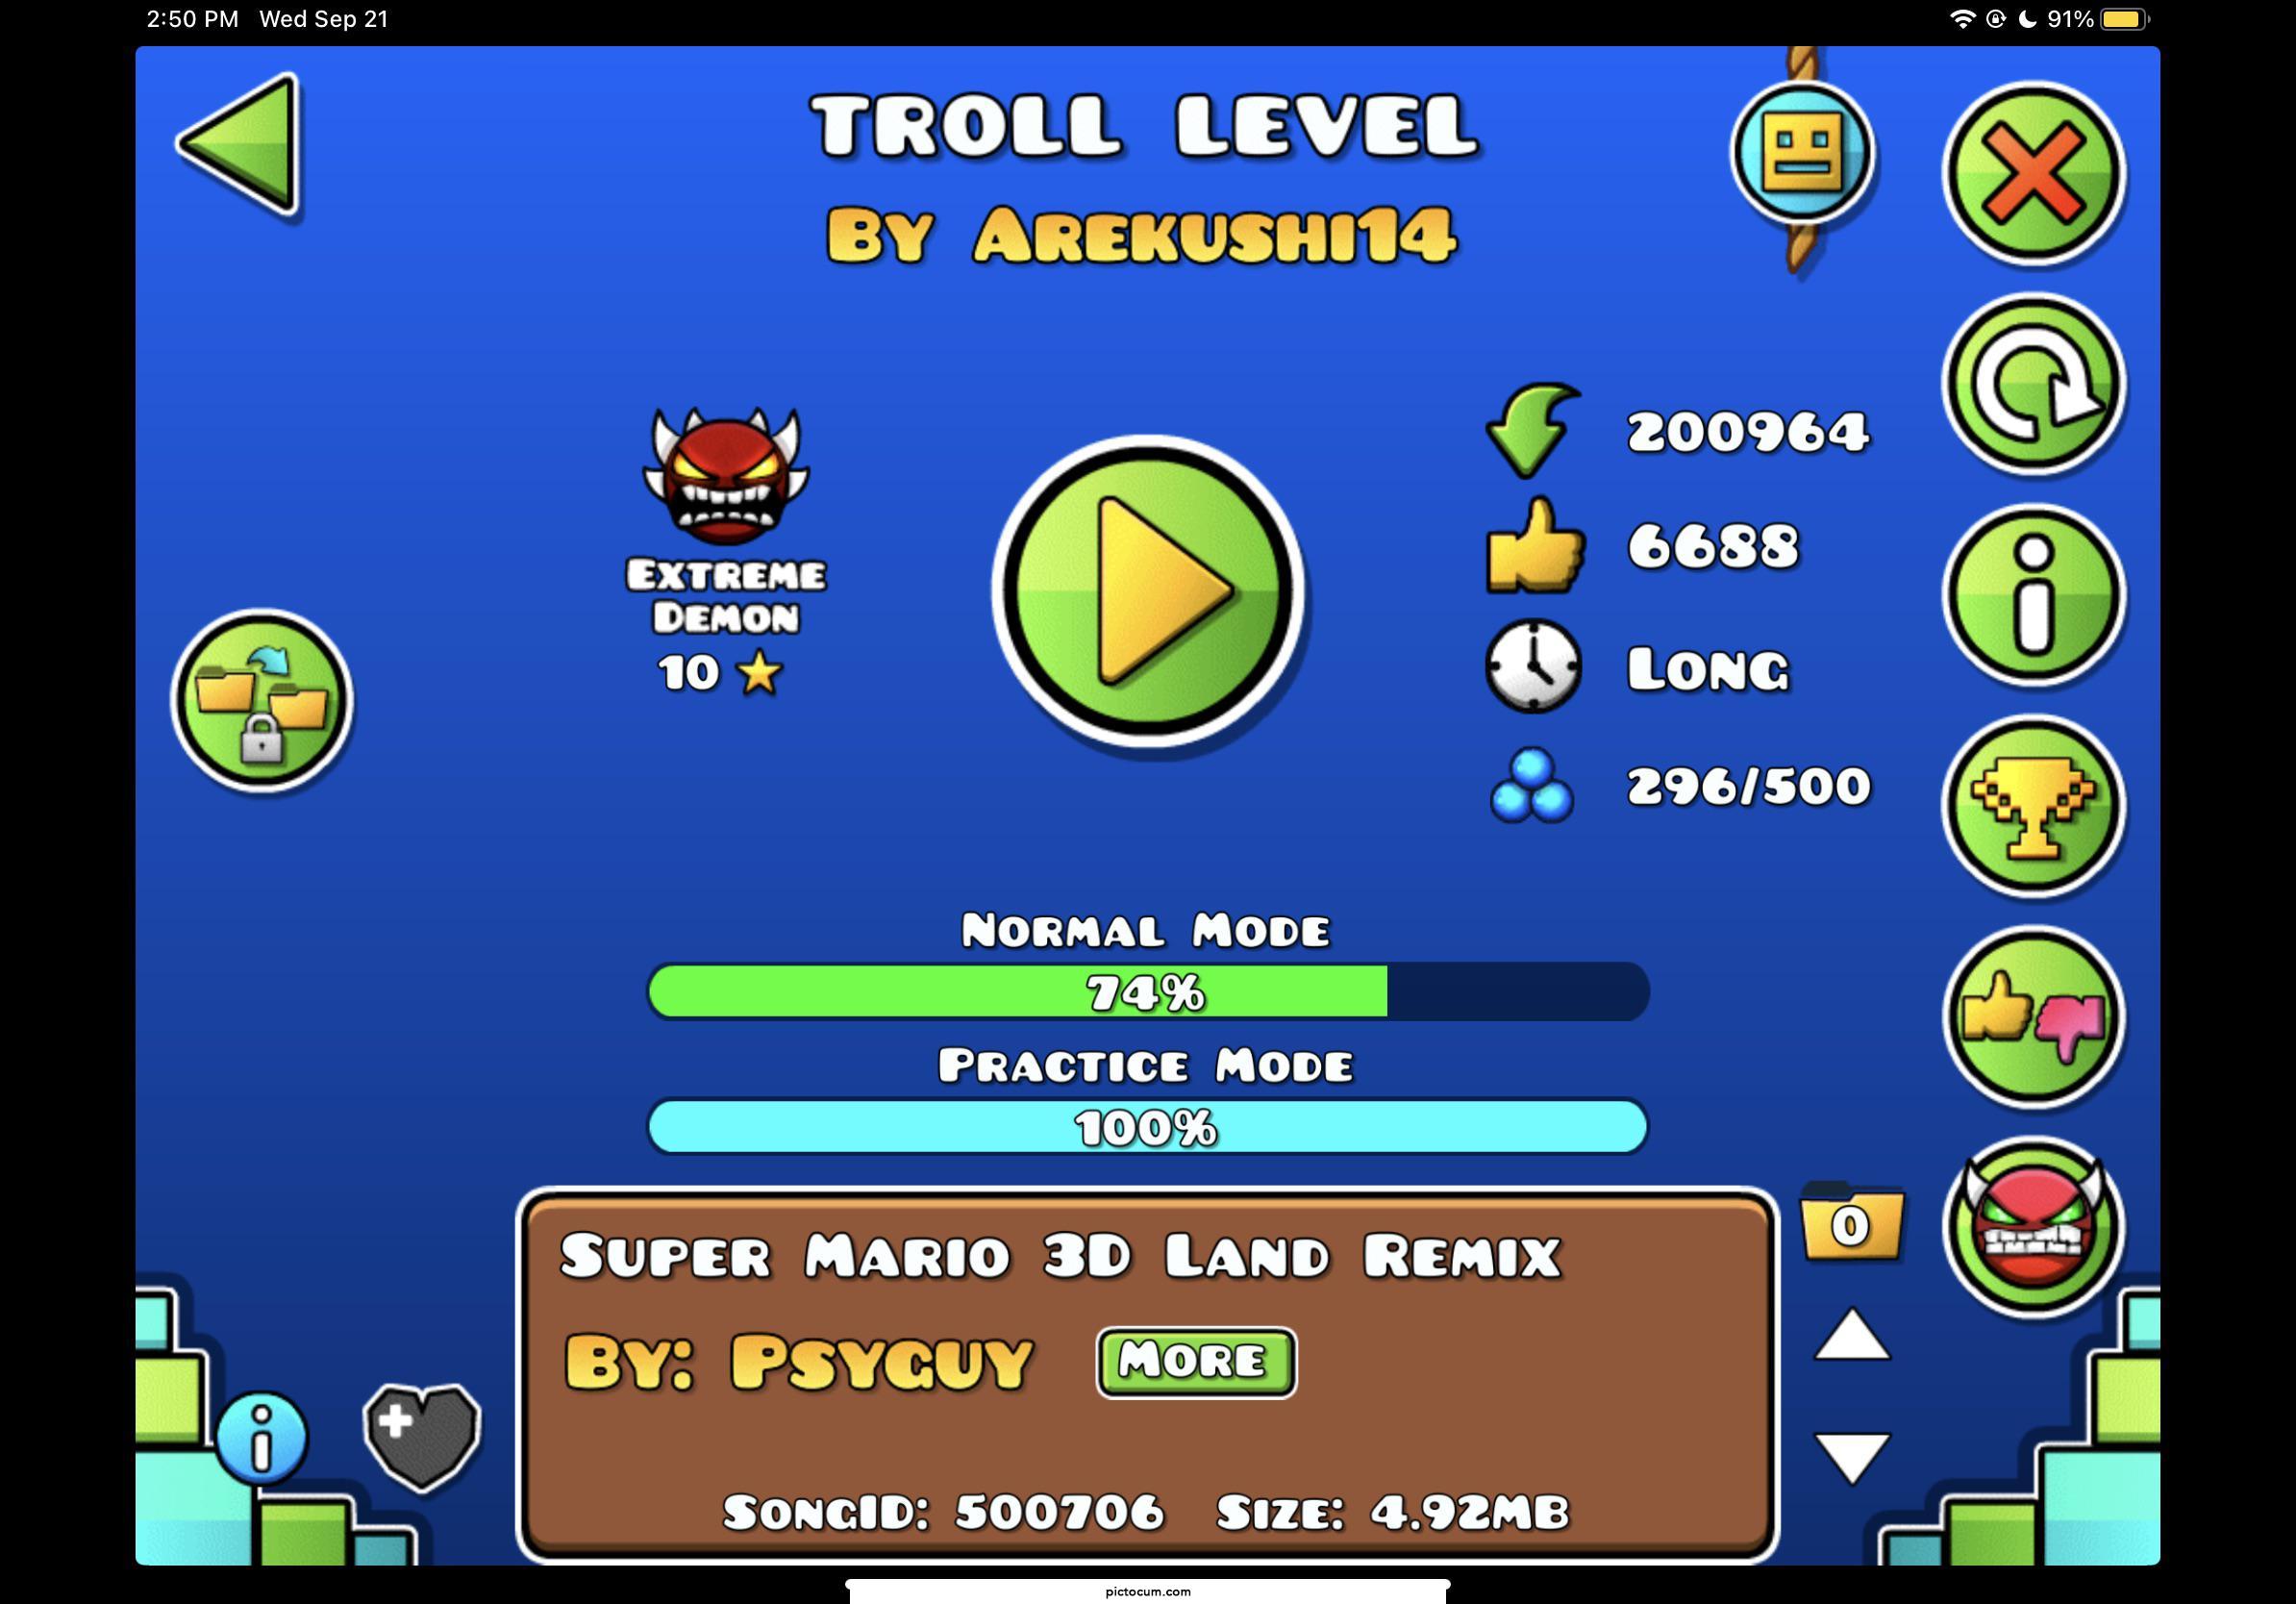 i got 74% on troll level gg!